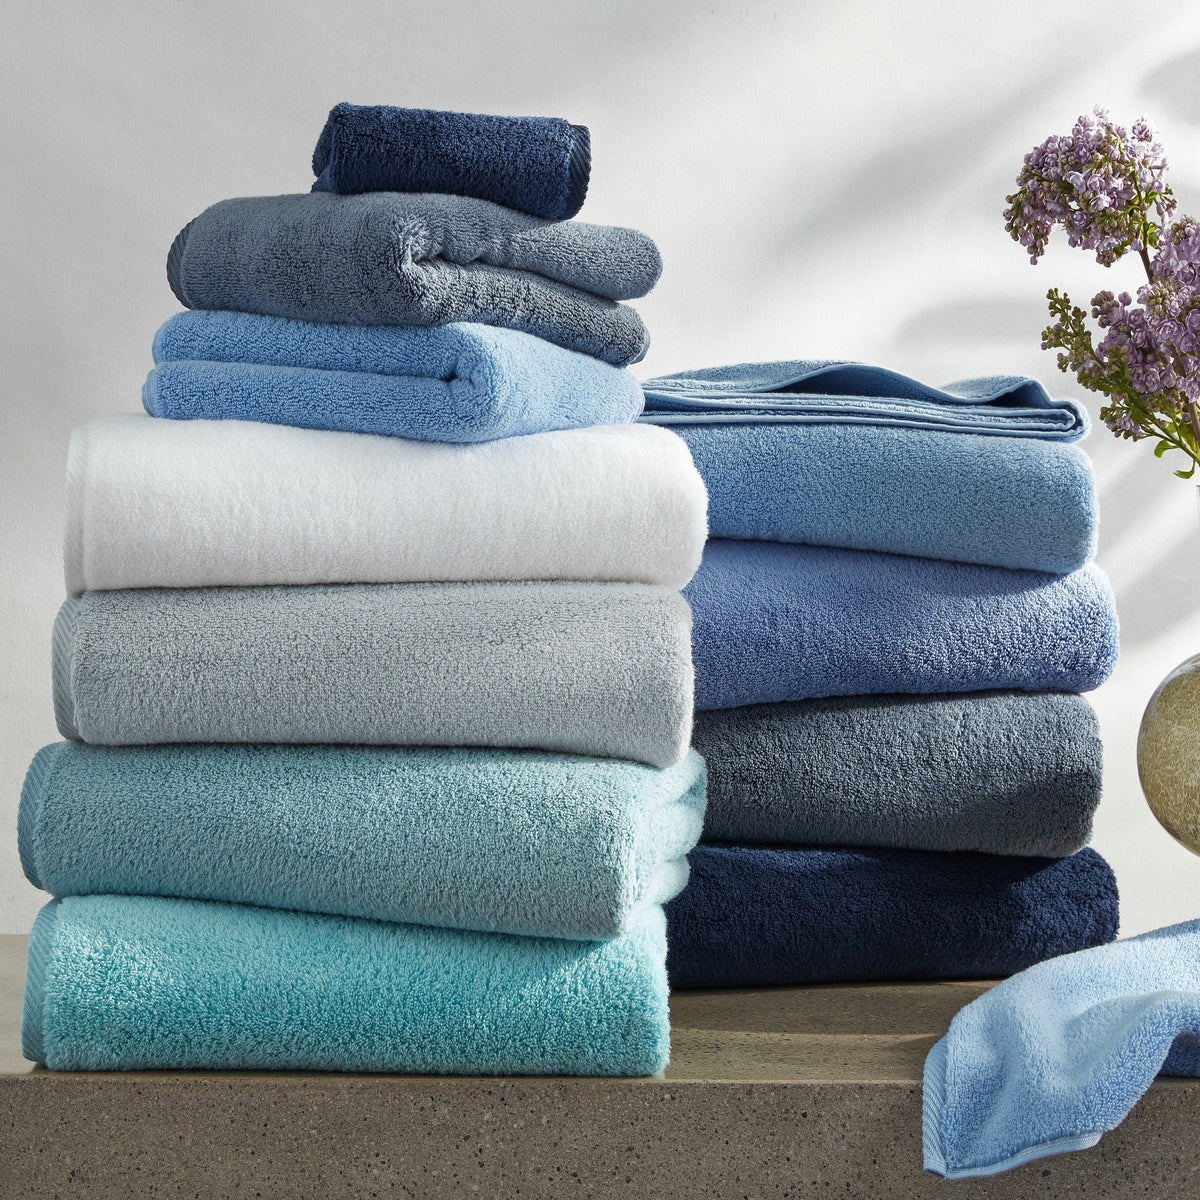 Extra Large Bath Towel - Oversized Ultra Bath Sheet - 100% Cotton - Charcoal Color